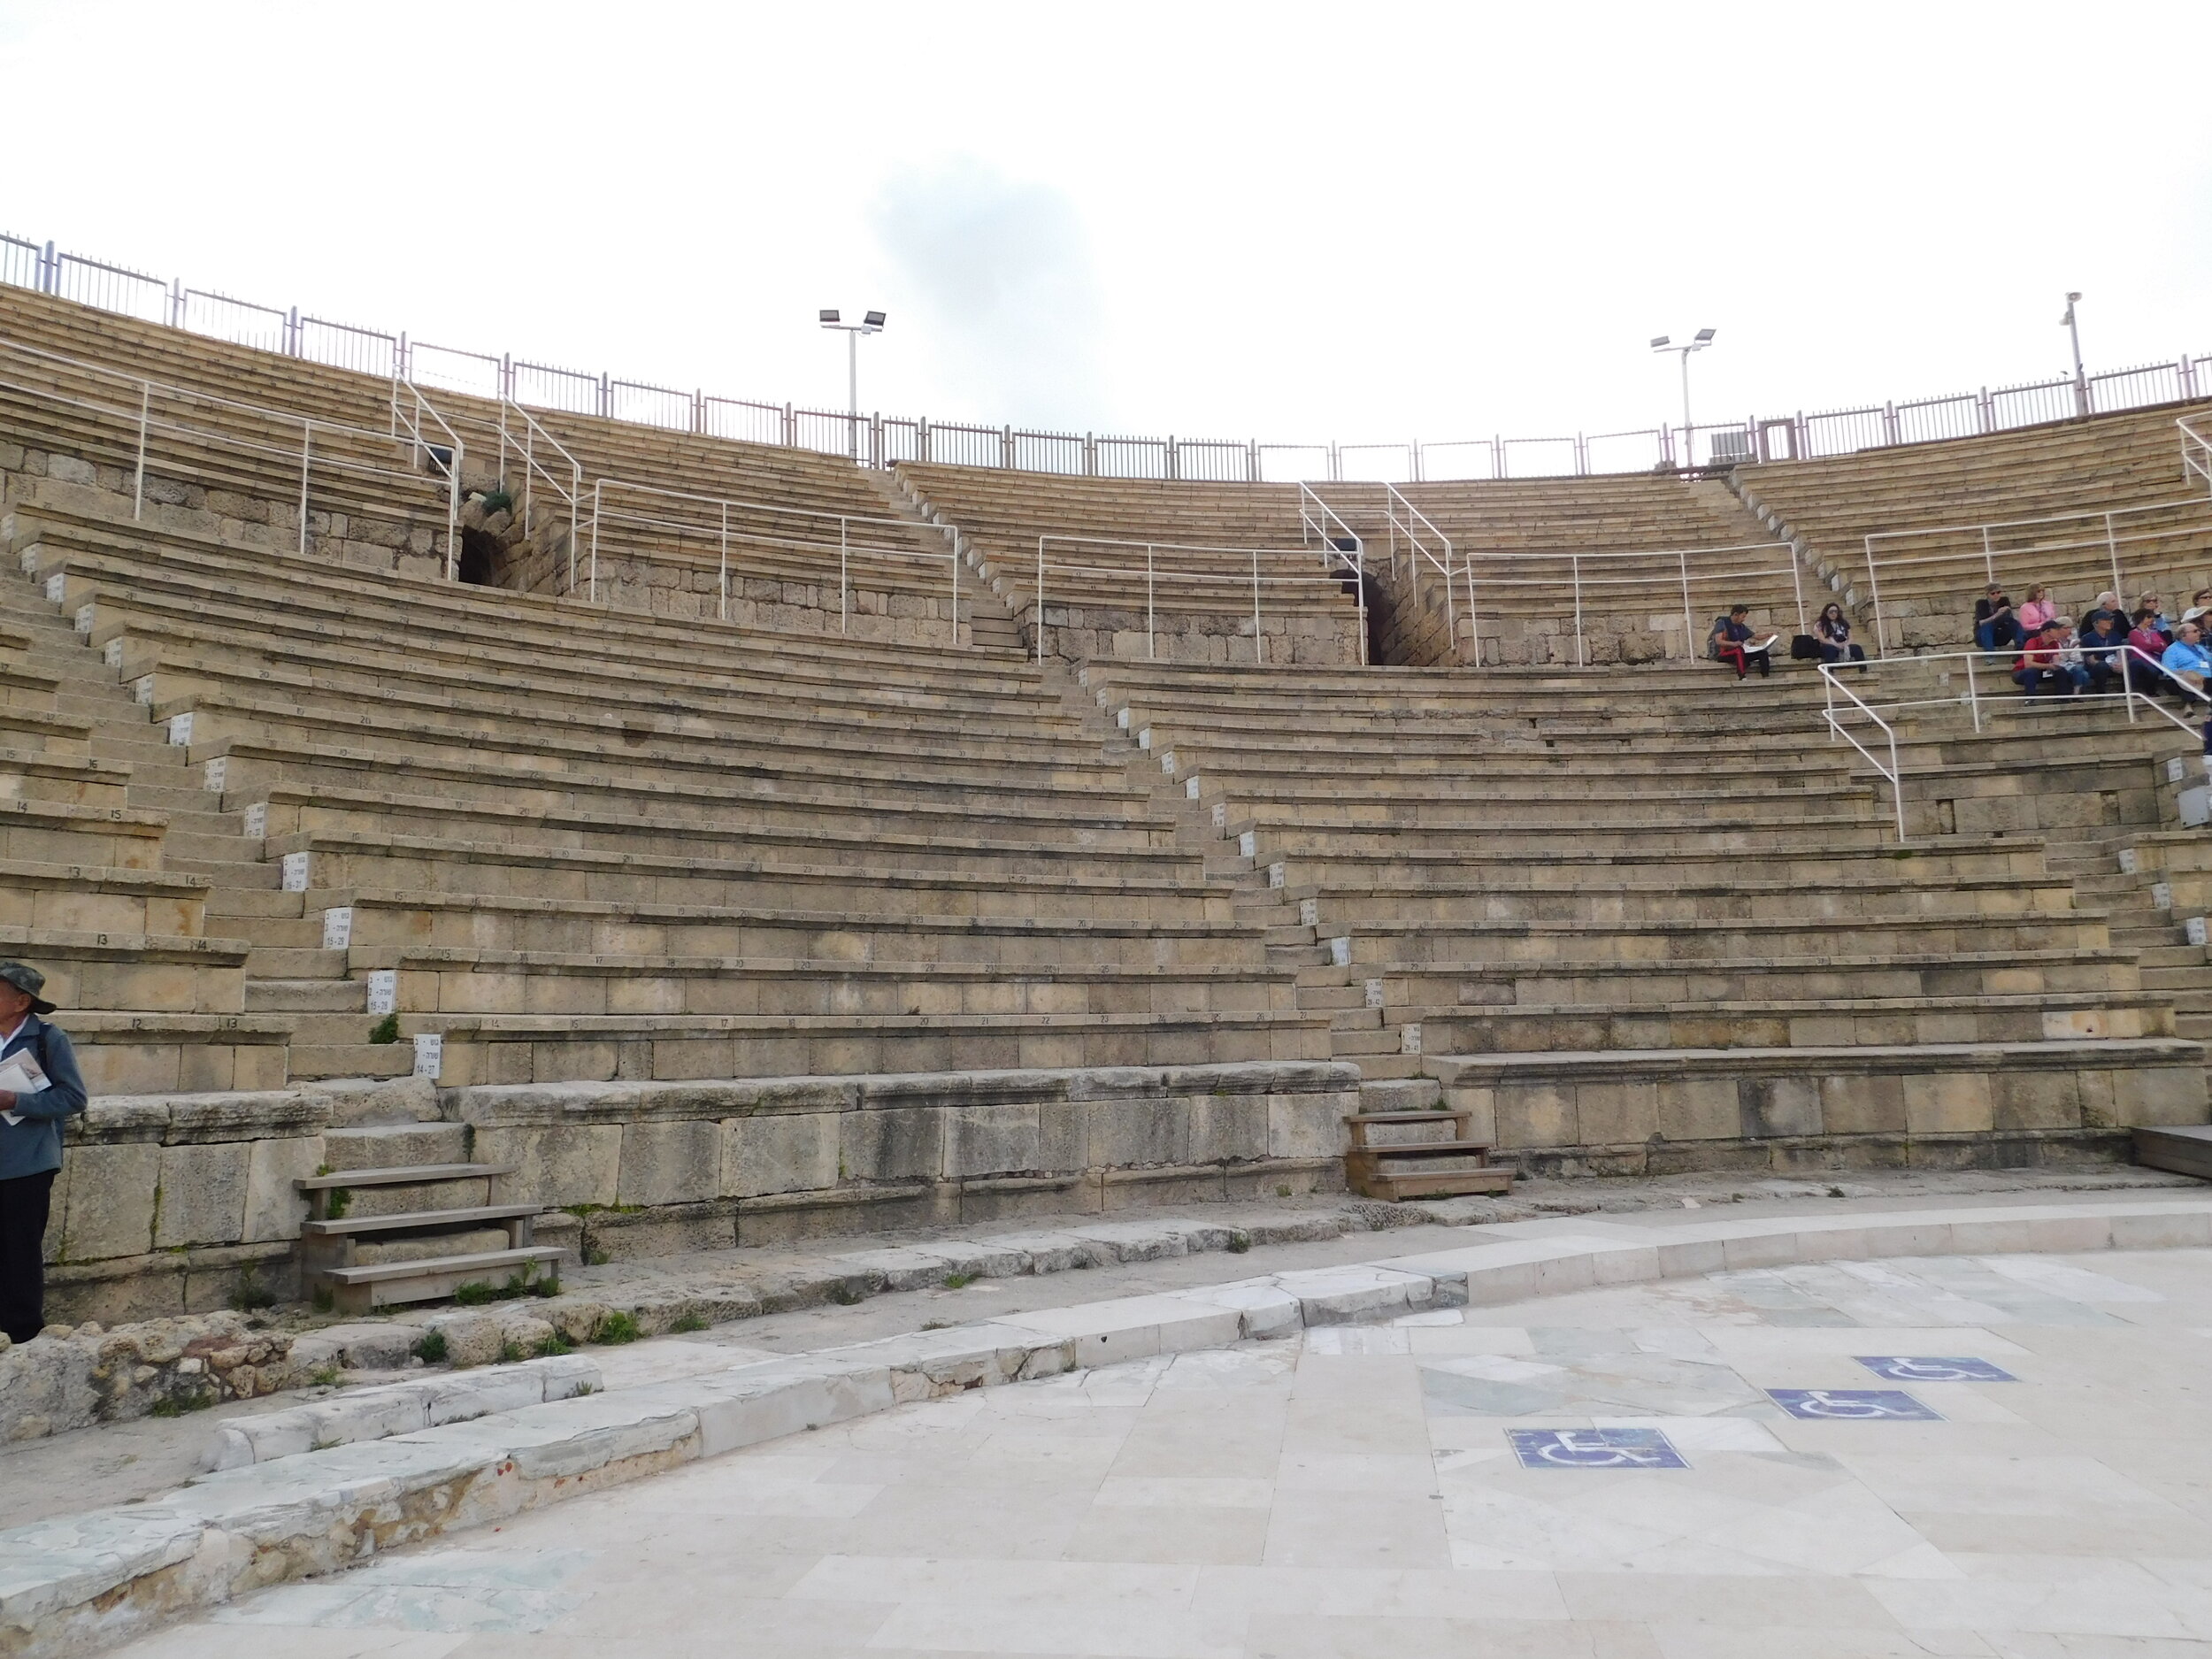  Amphitheater at Caesarea built by King Herod 